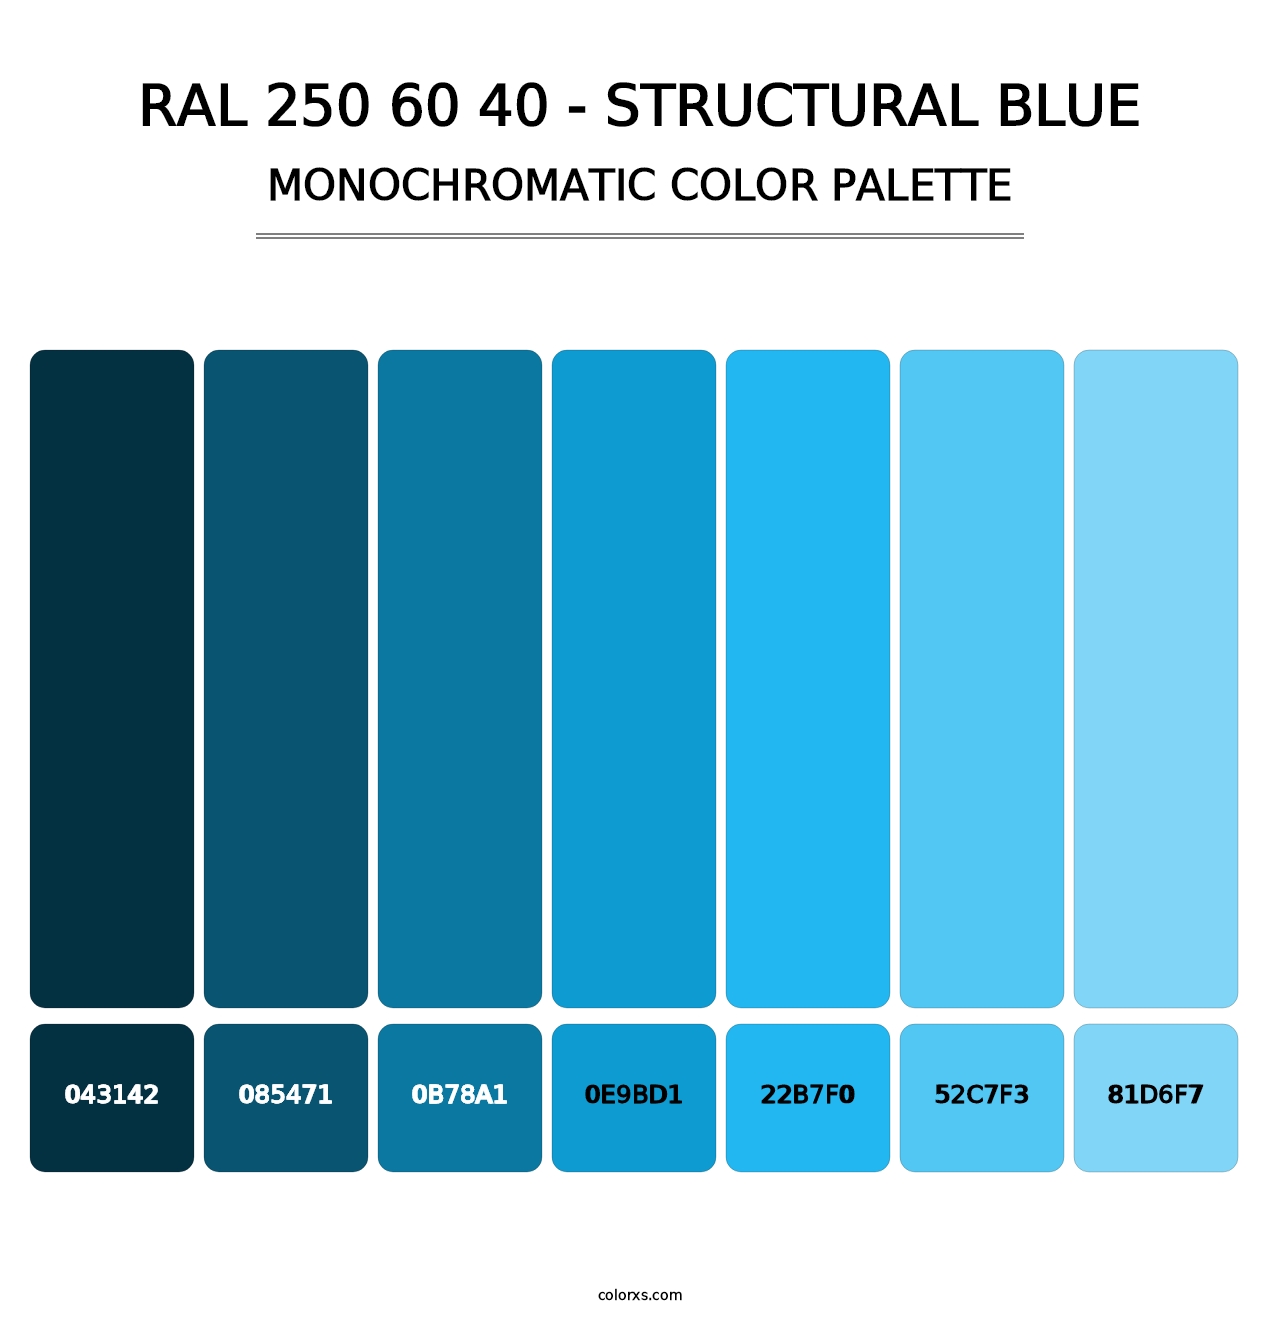 RAL 250 60 40 - Structural Blue - Monochromatic Color Palette